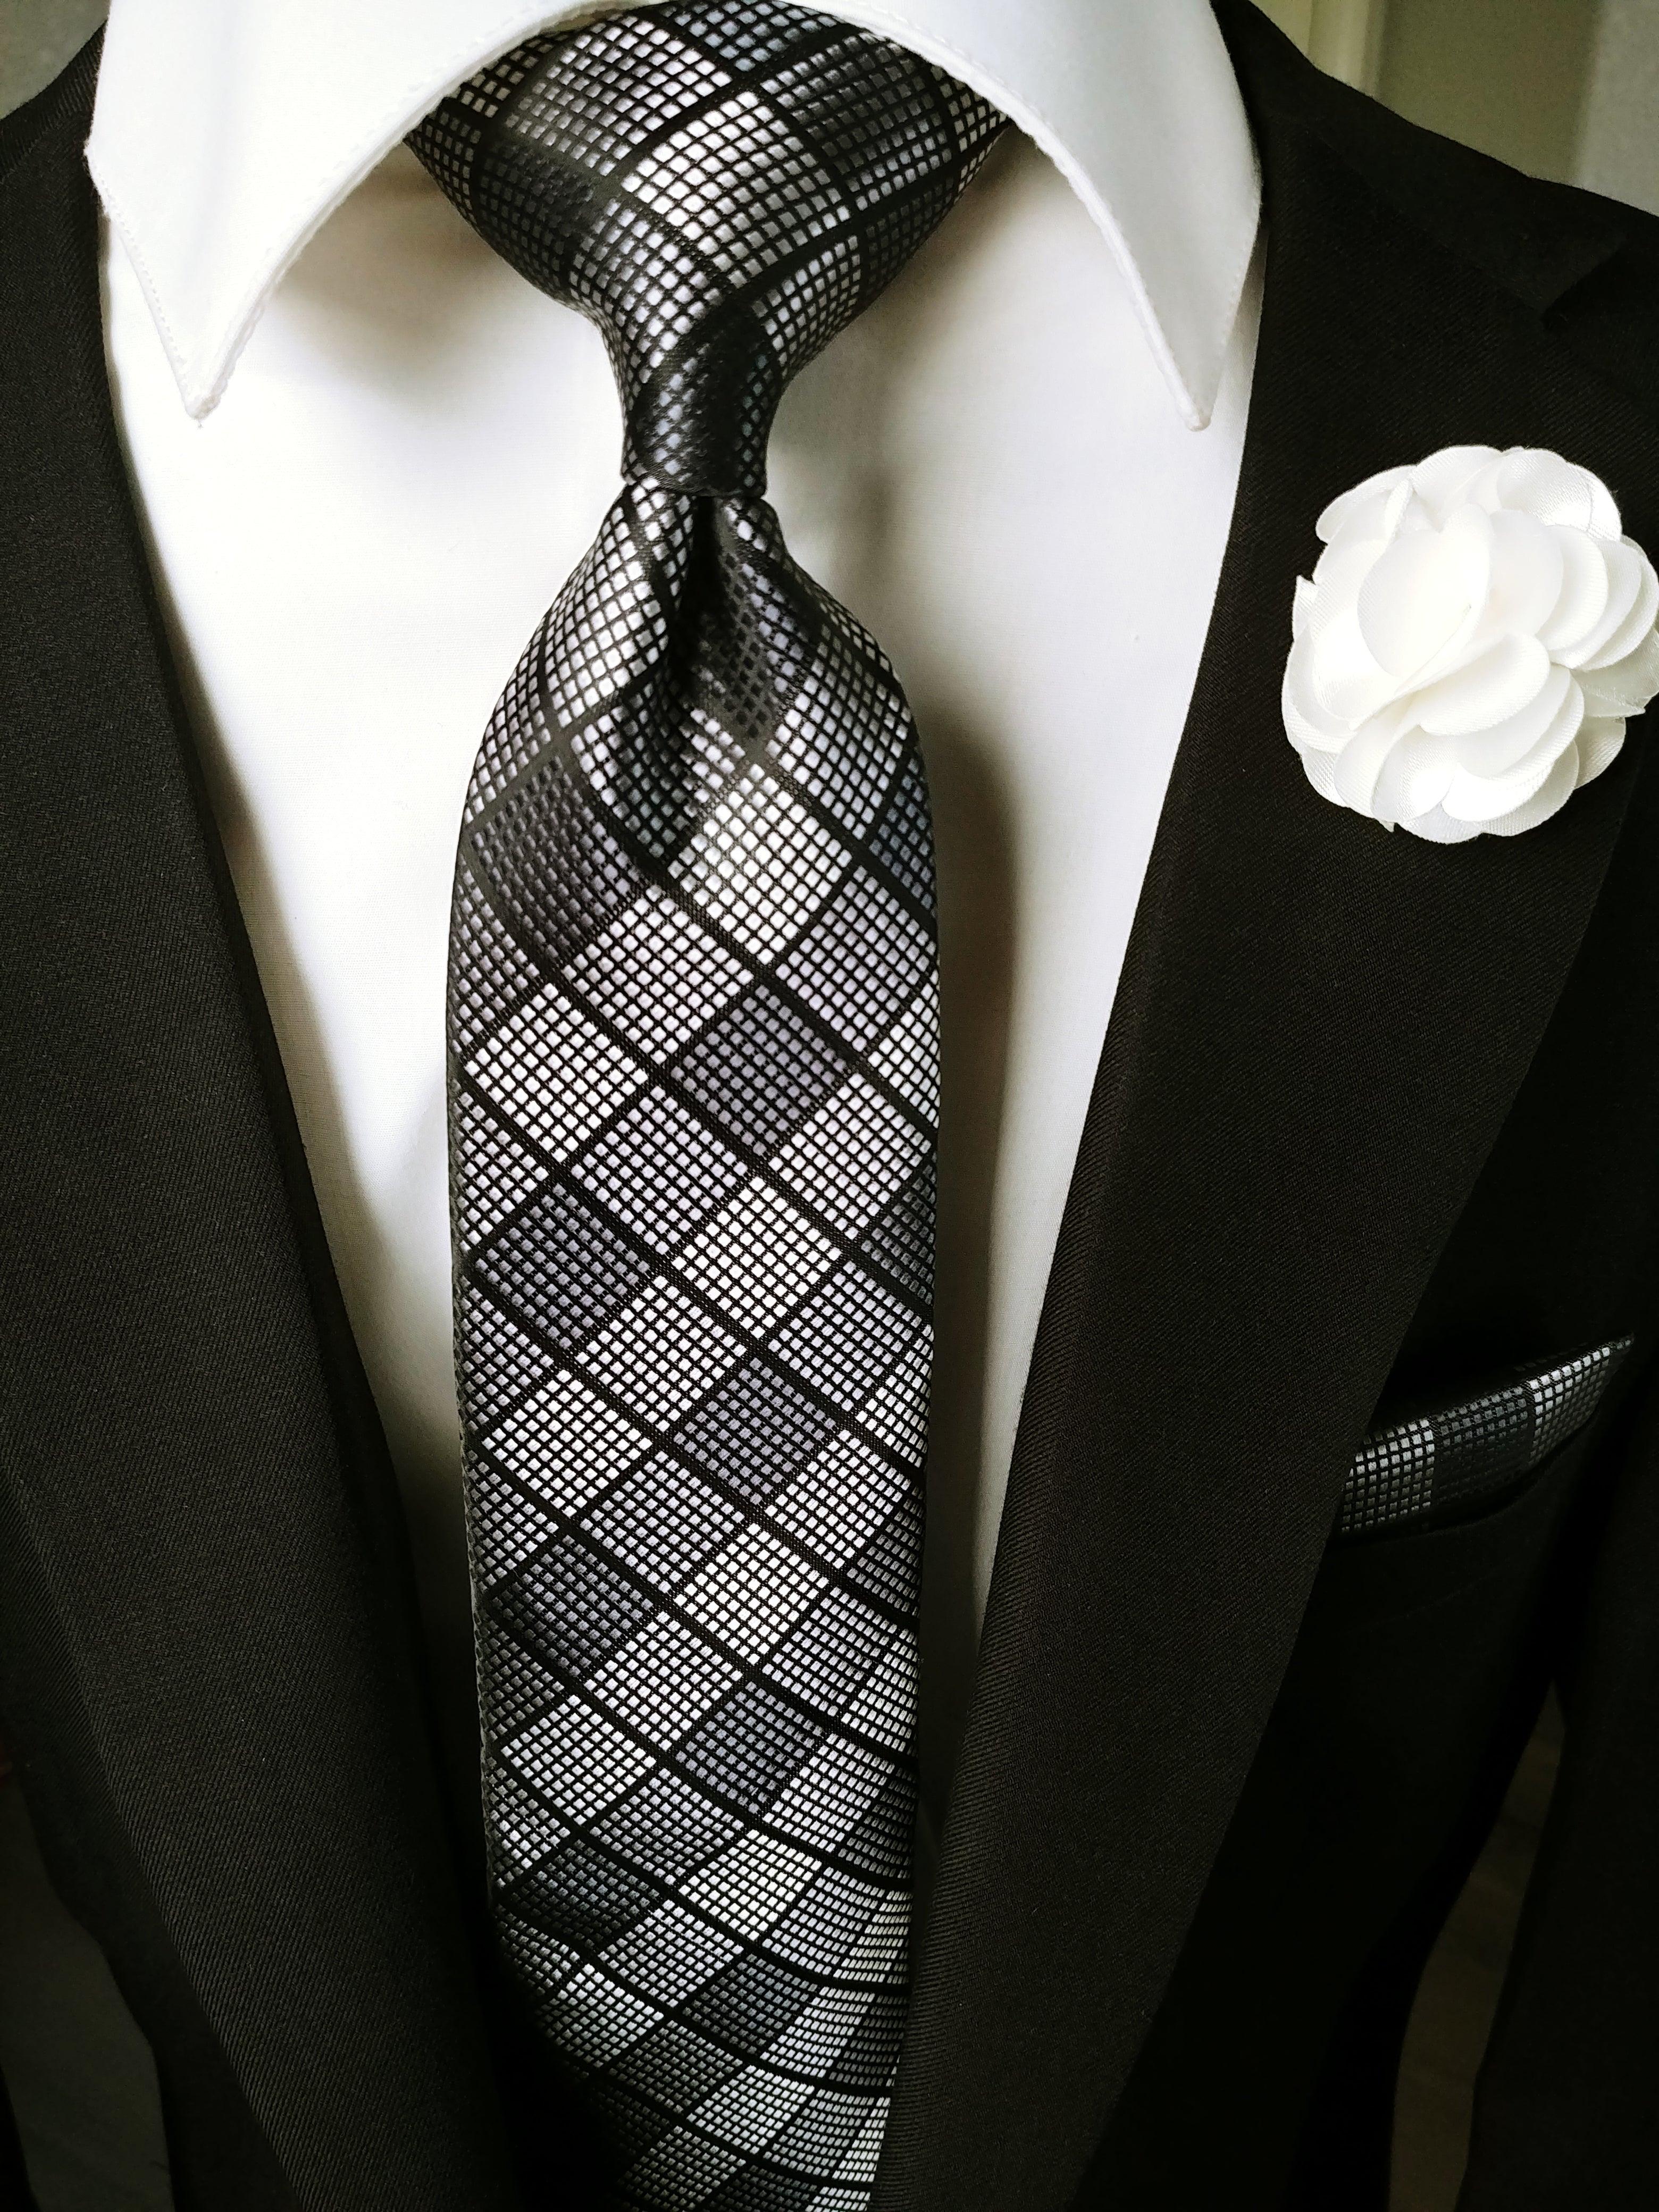 Plaid Tie Set of Pocket Square and Cufflinks - STYLETIE